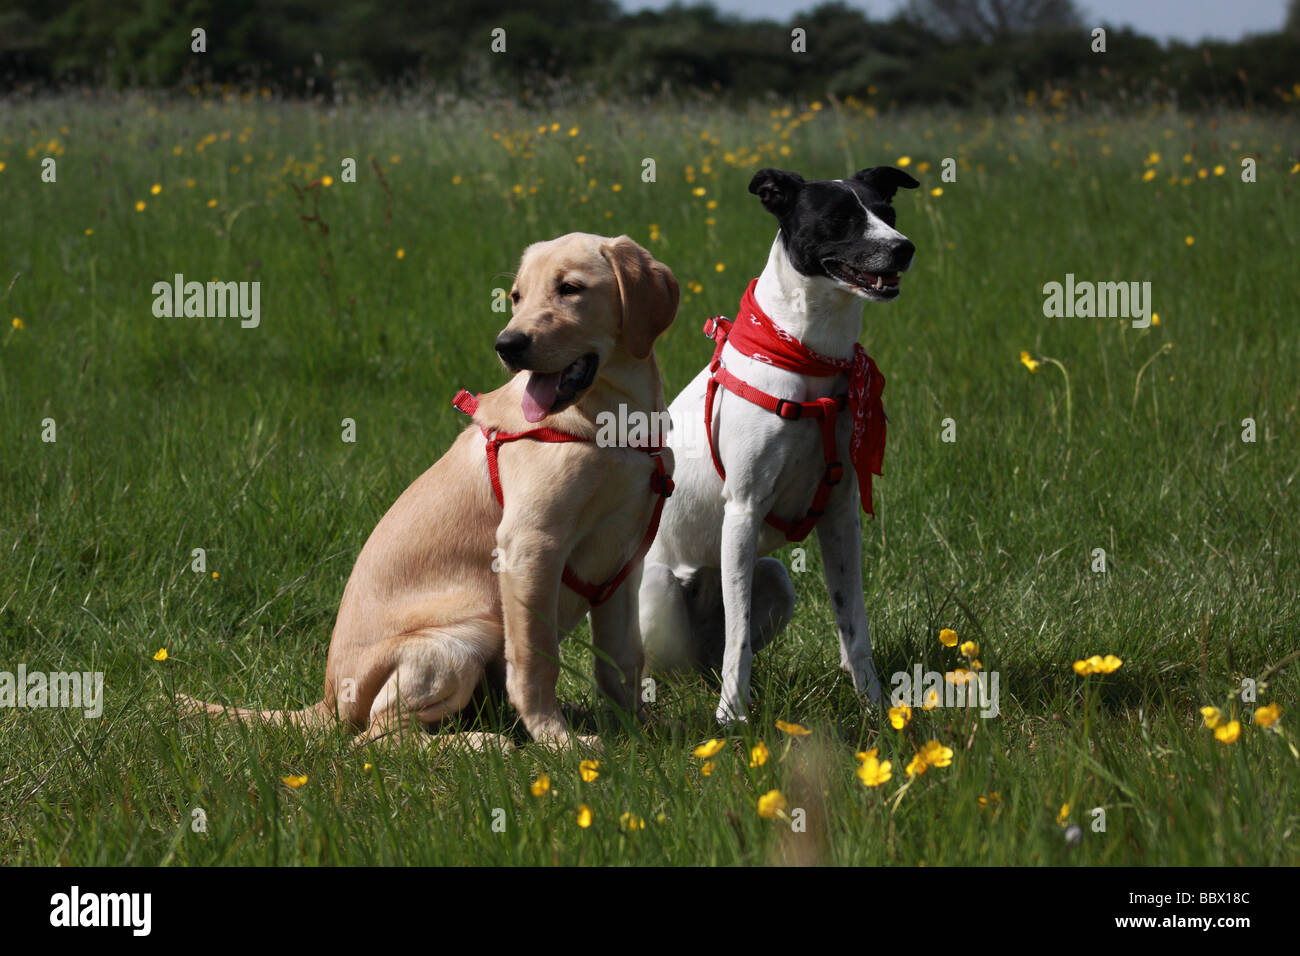 Thoroughbred,Mixed-razza cane,Labrador Retriever Foto Stock